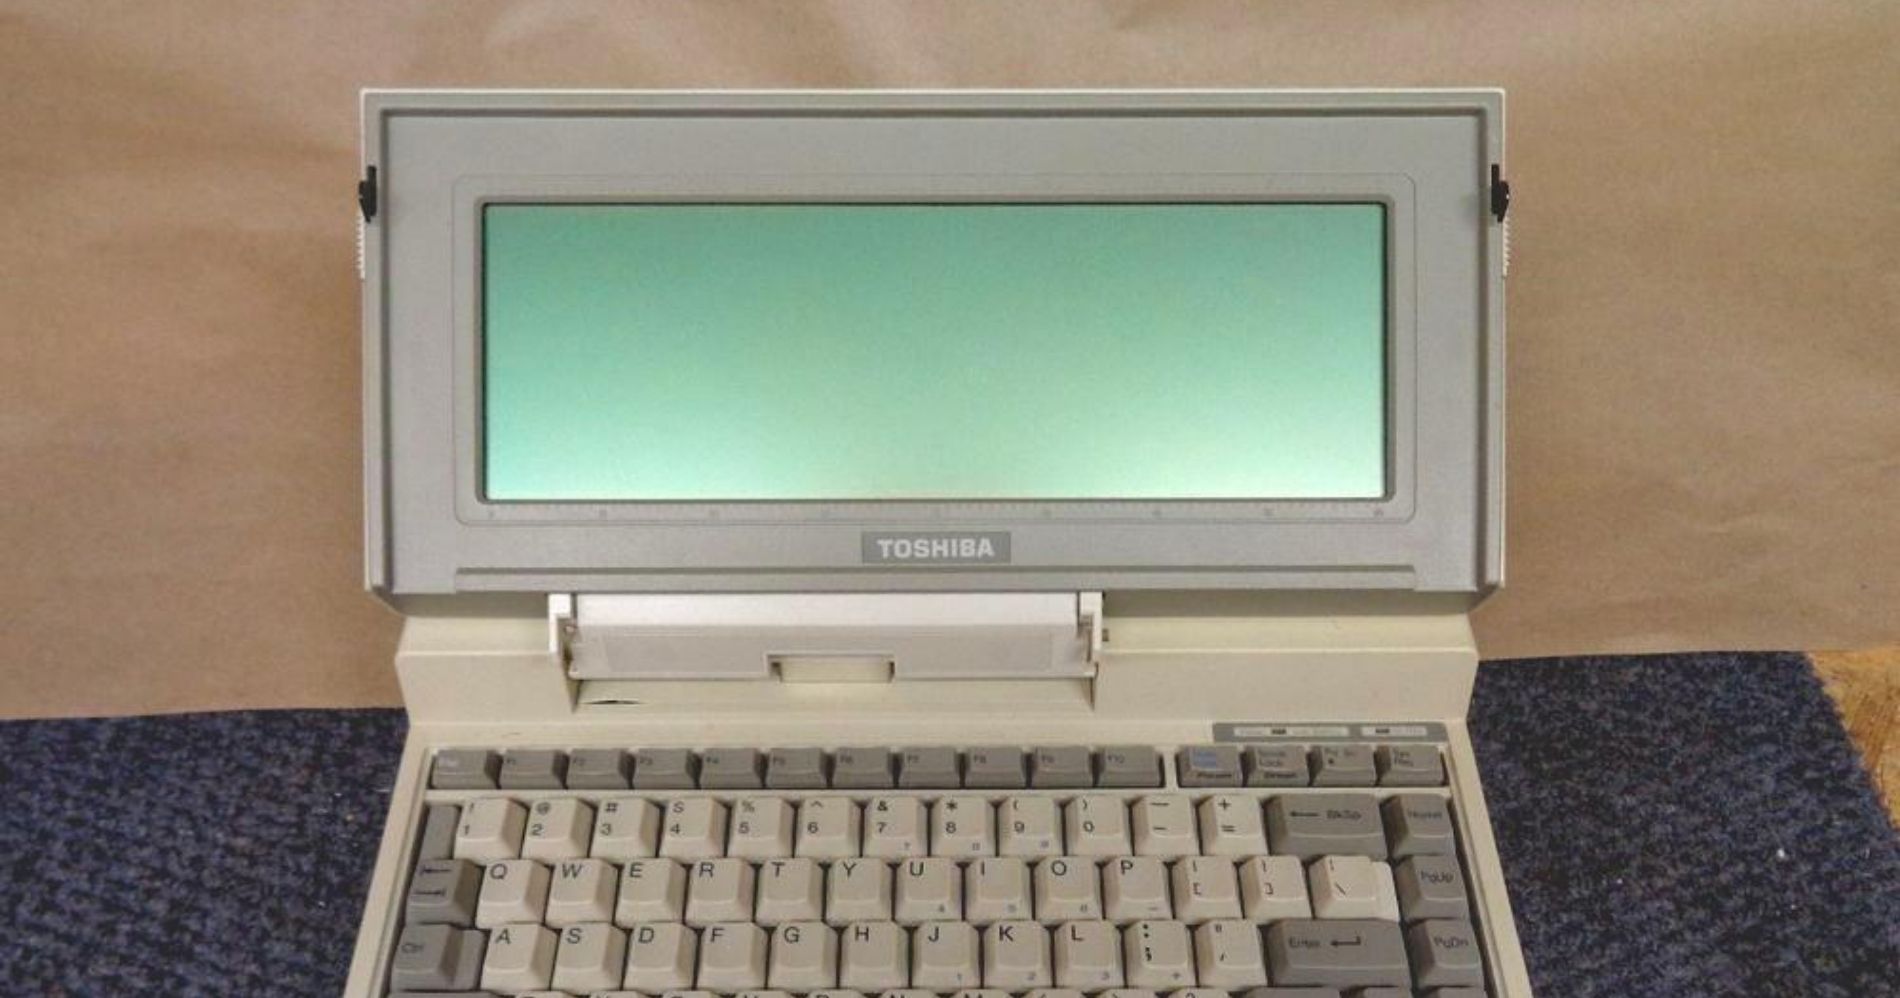 Toshiba T1100 First Laptop - Image: Pinterest